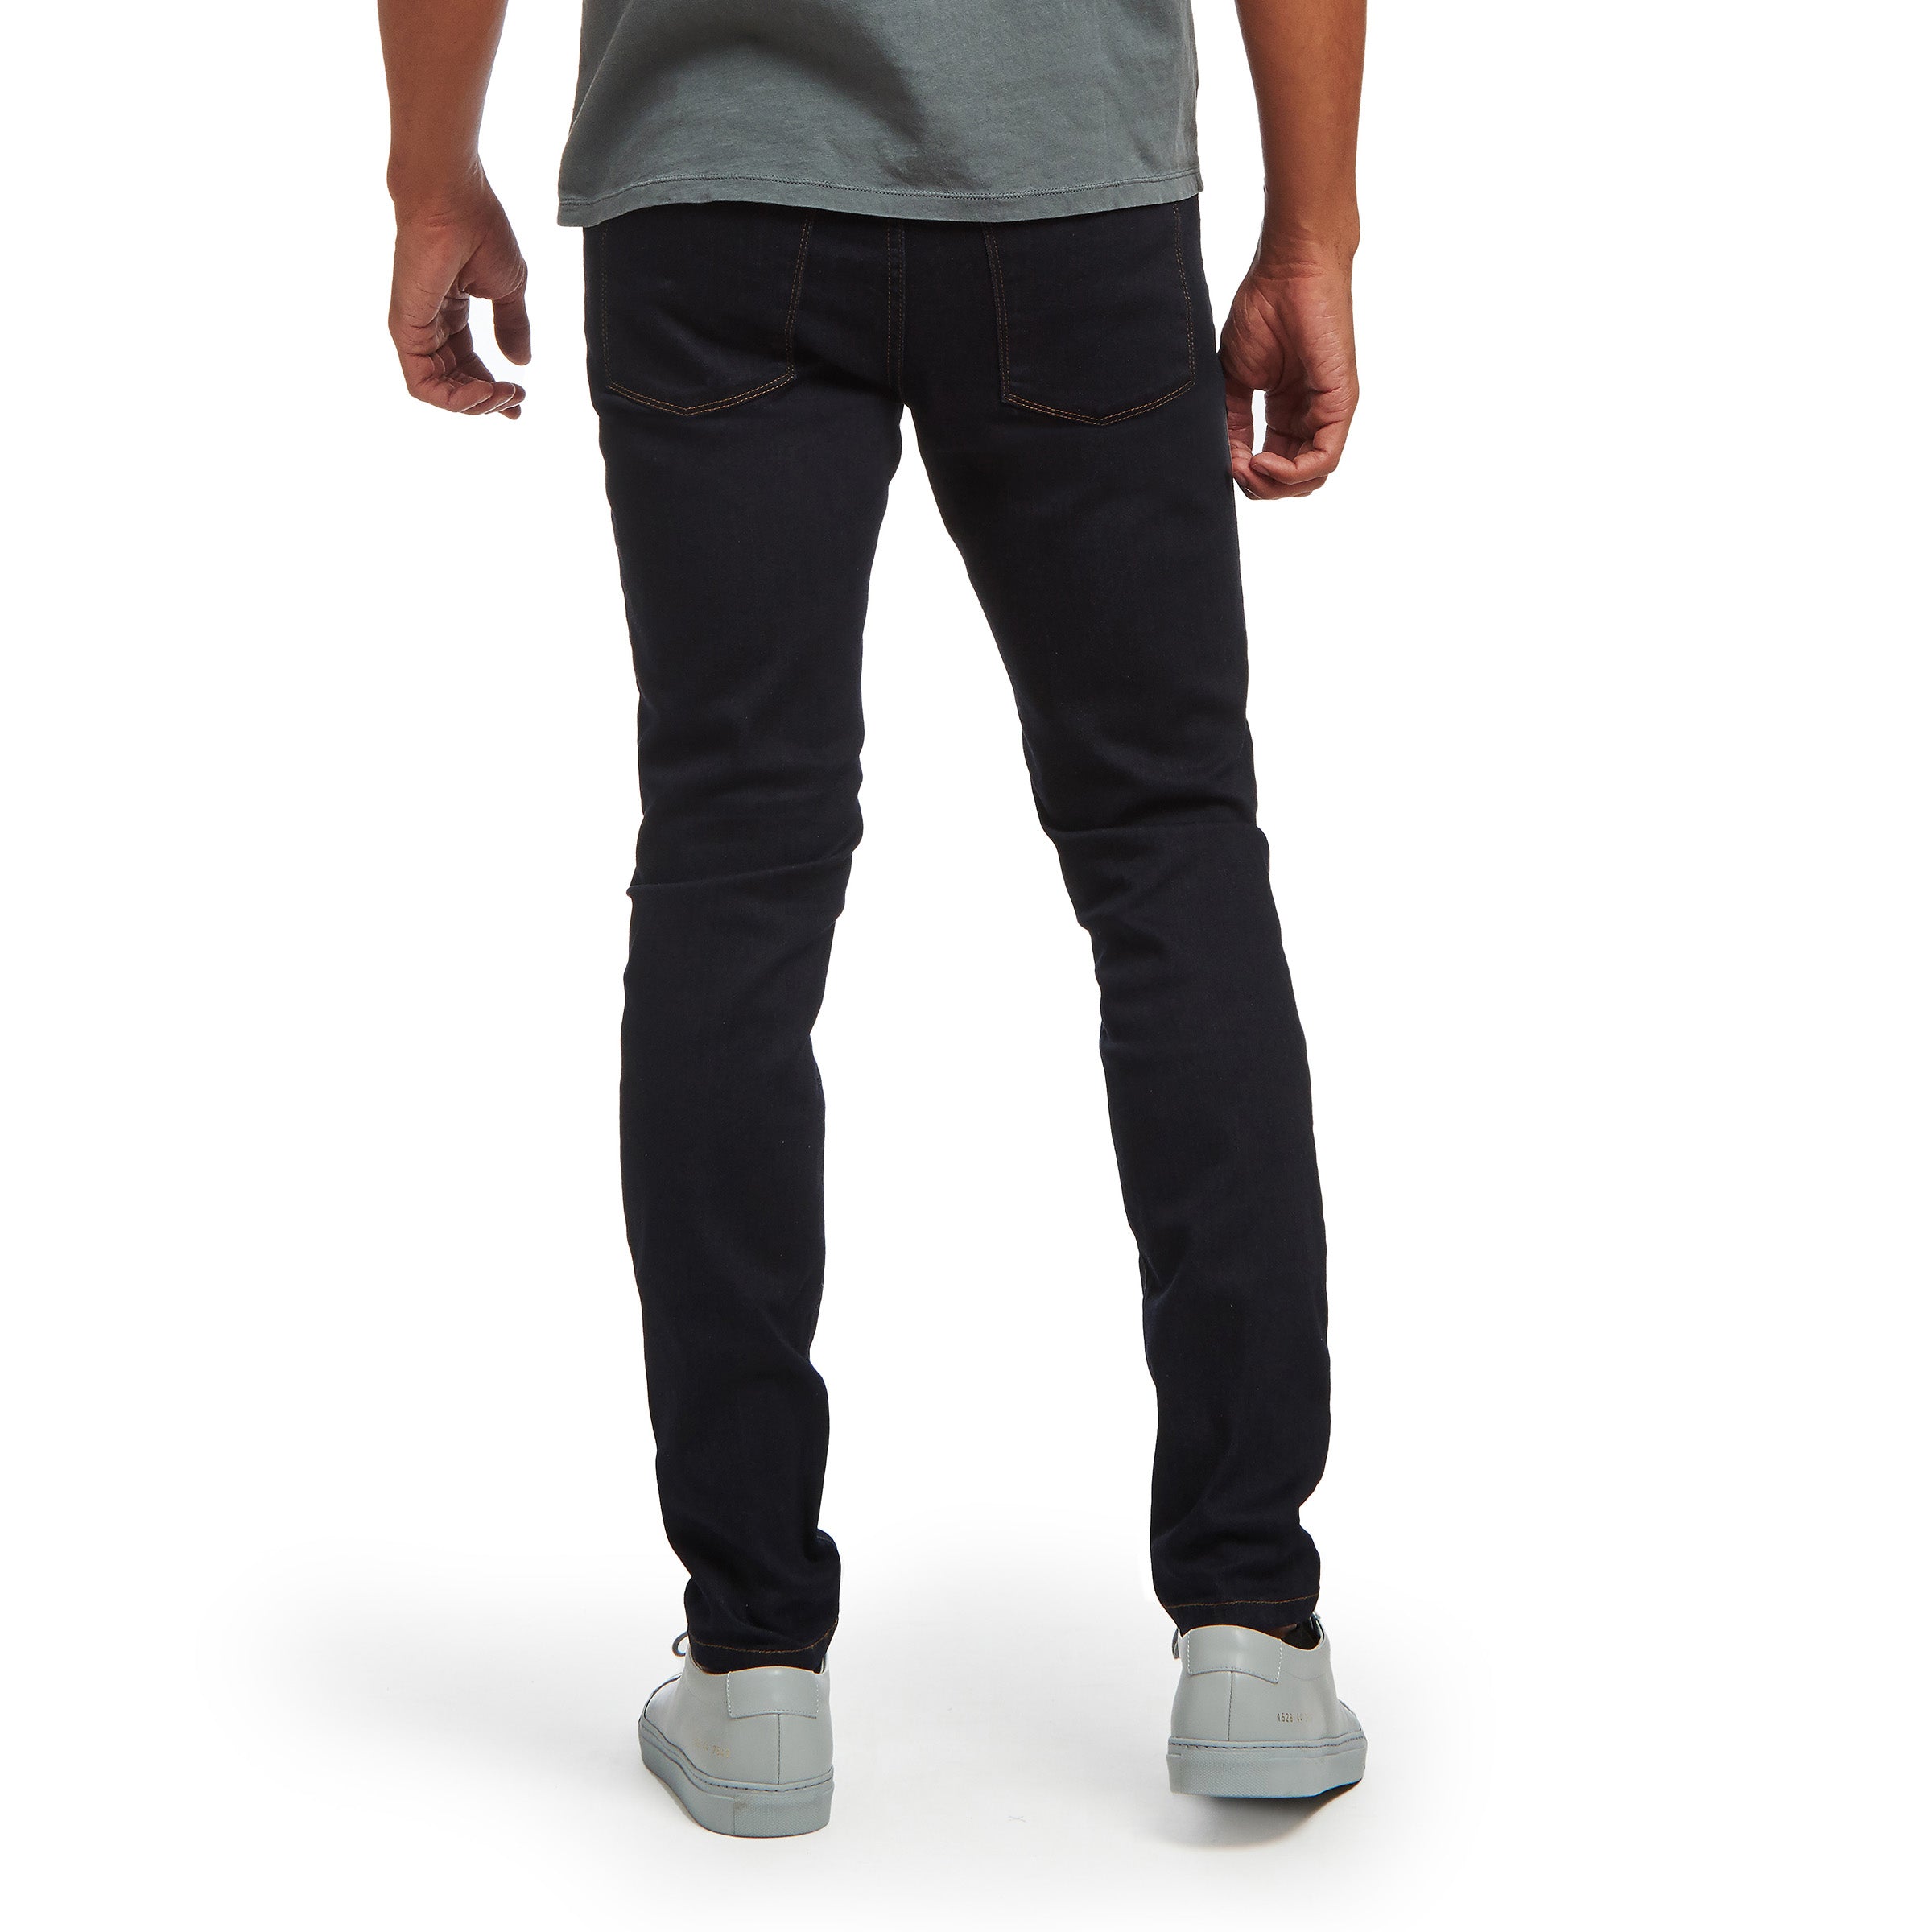 George Men's Slim Fit Jeans - Walmart.com